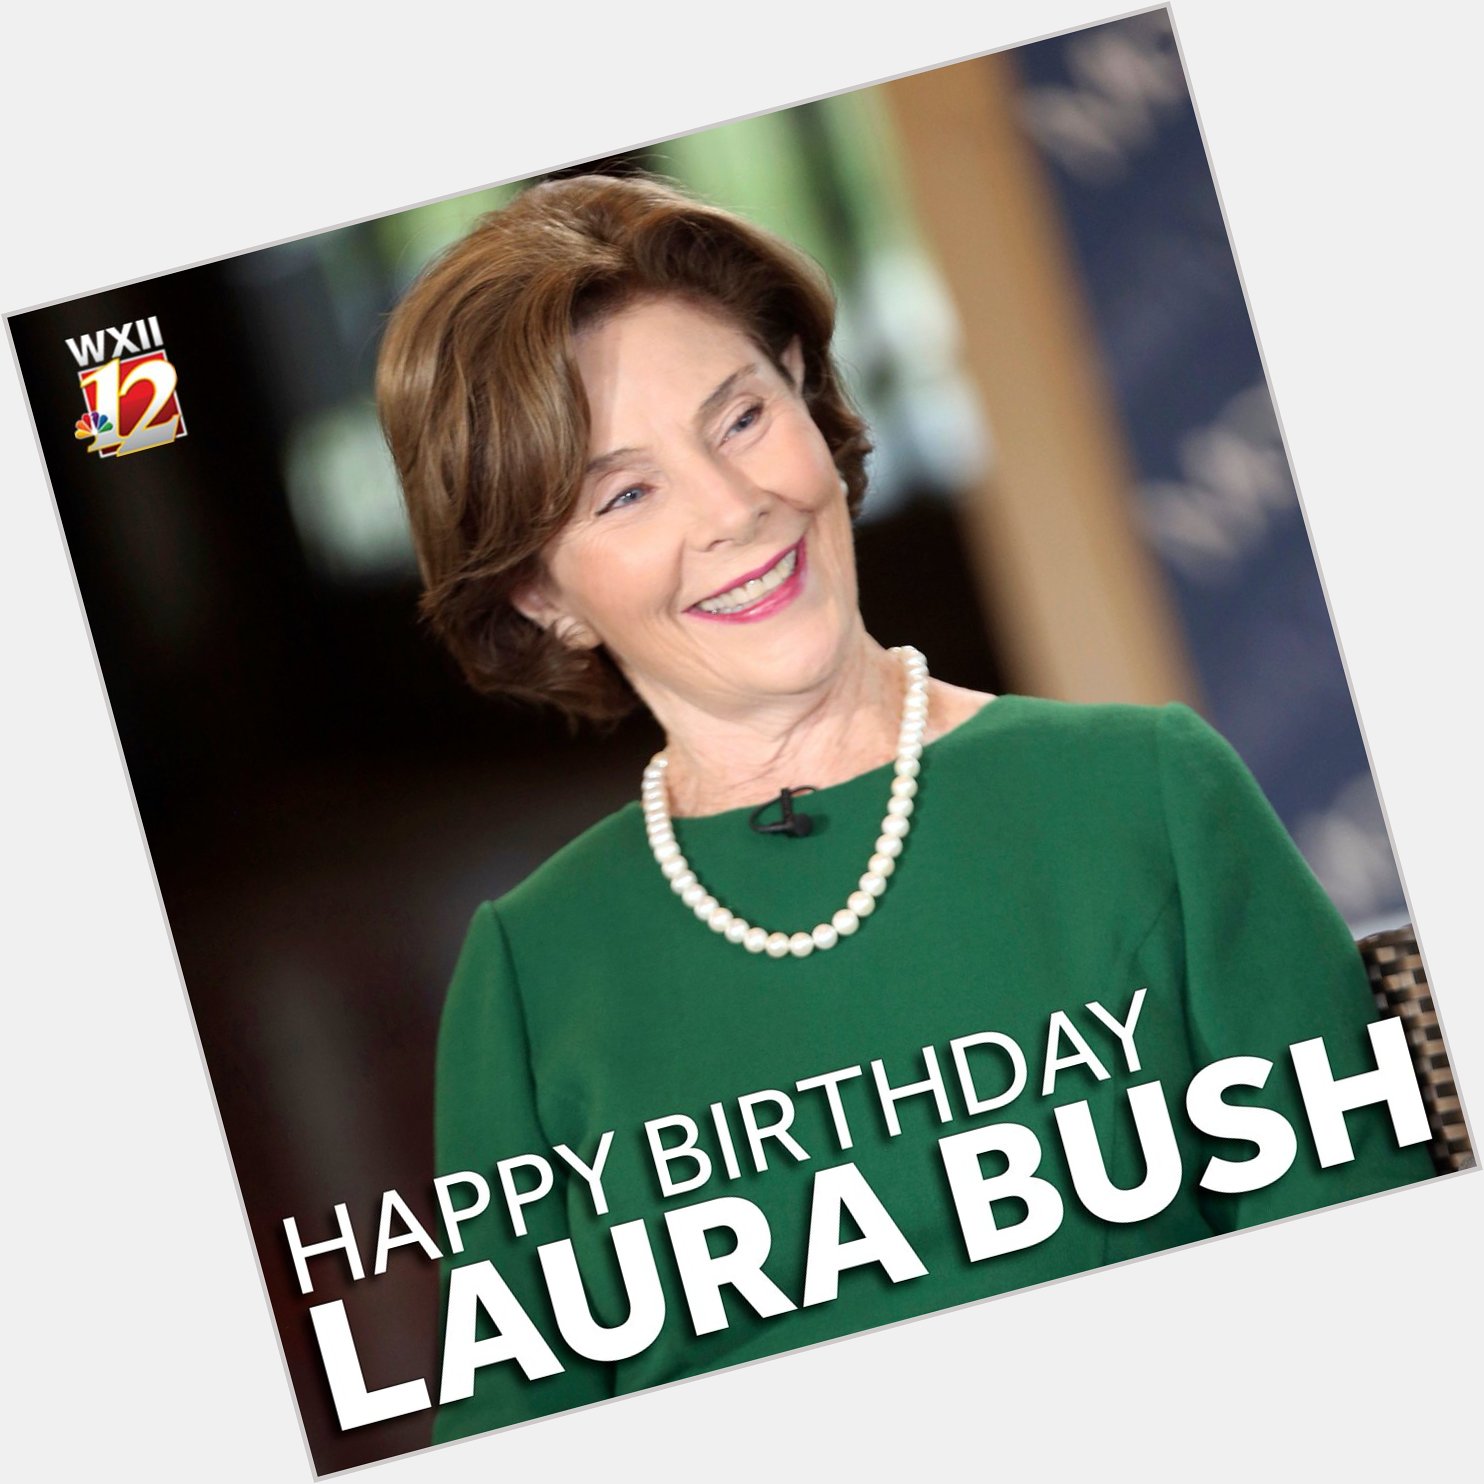   Happy birthday, Laura Bush! 